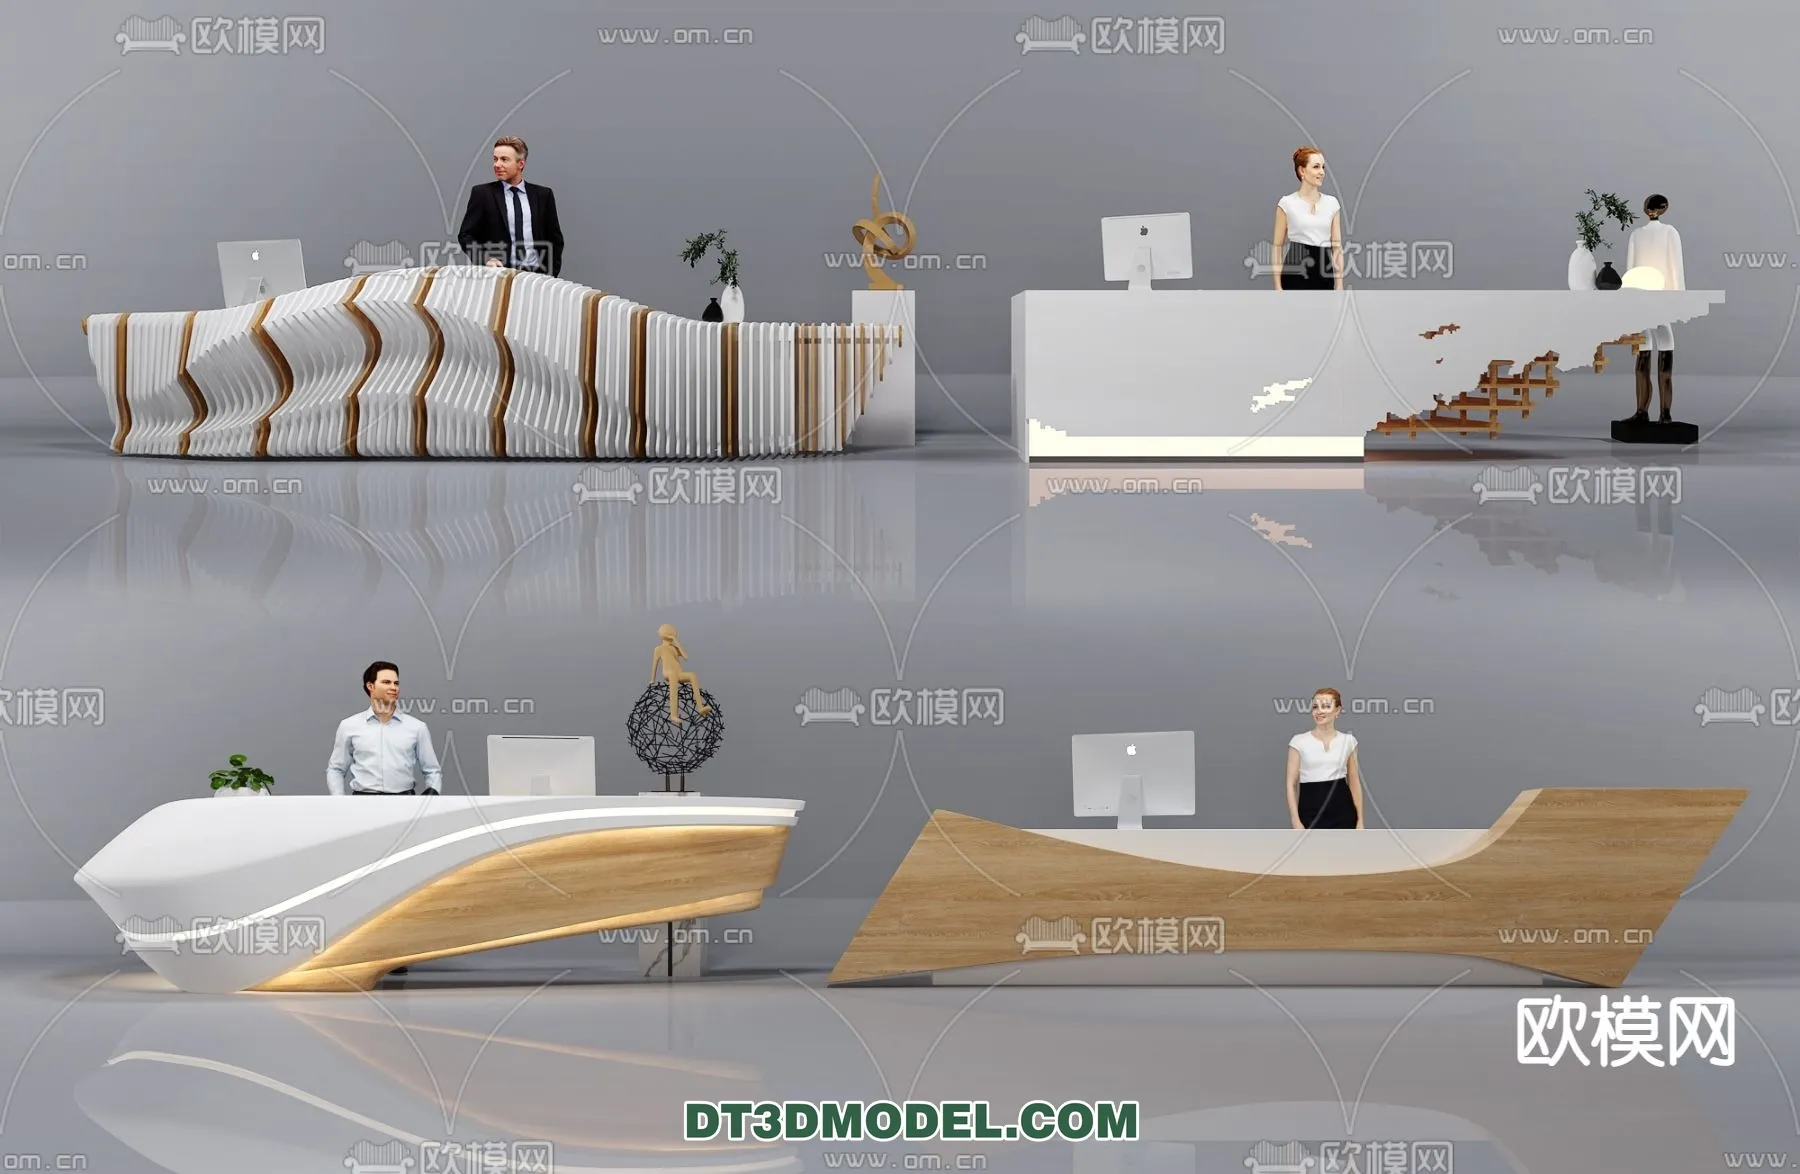 RECEPTION 3D MODEL – MODERN STYLE – 017